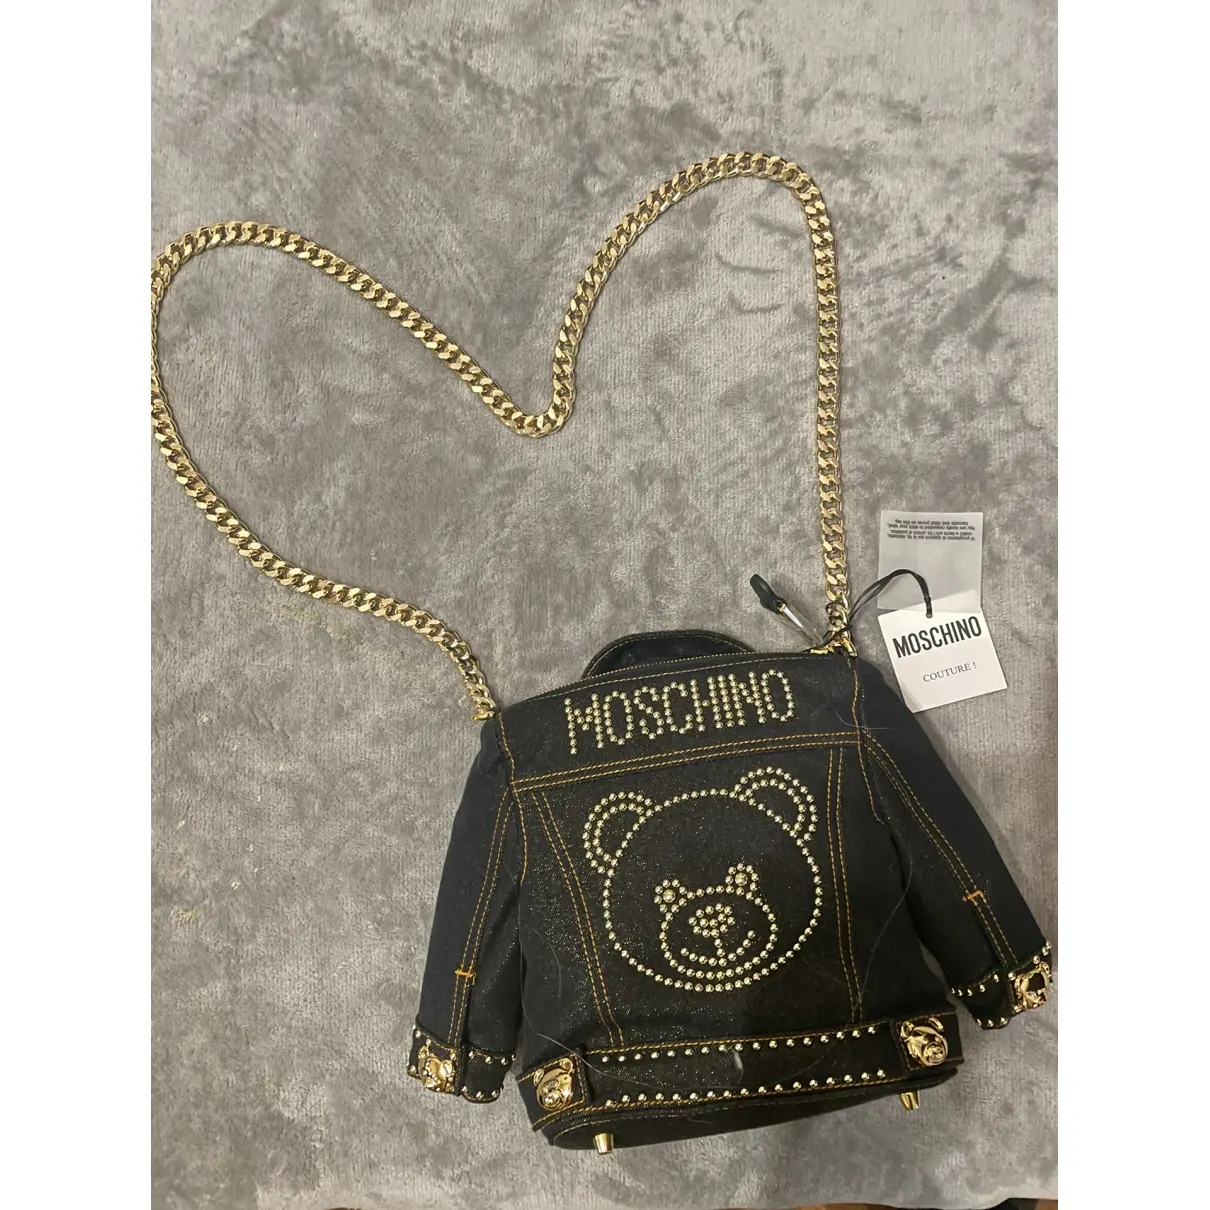 Buy Moschino Handbag online